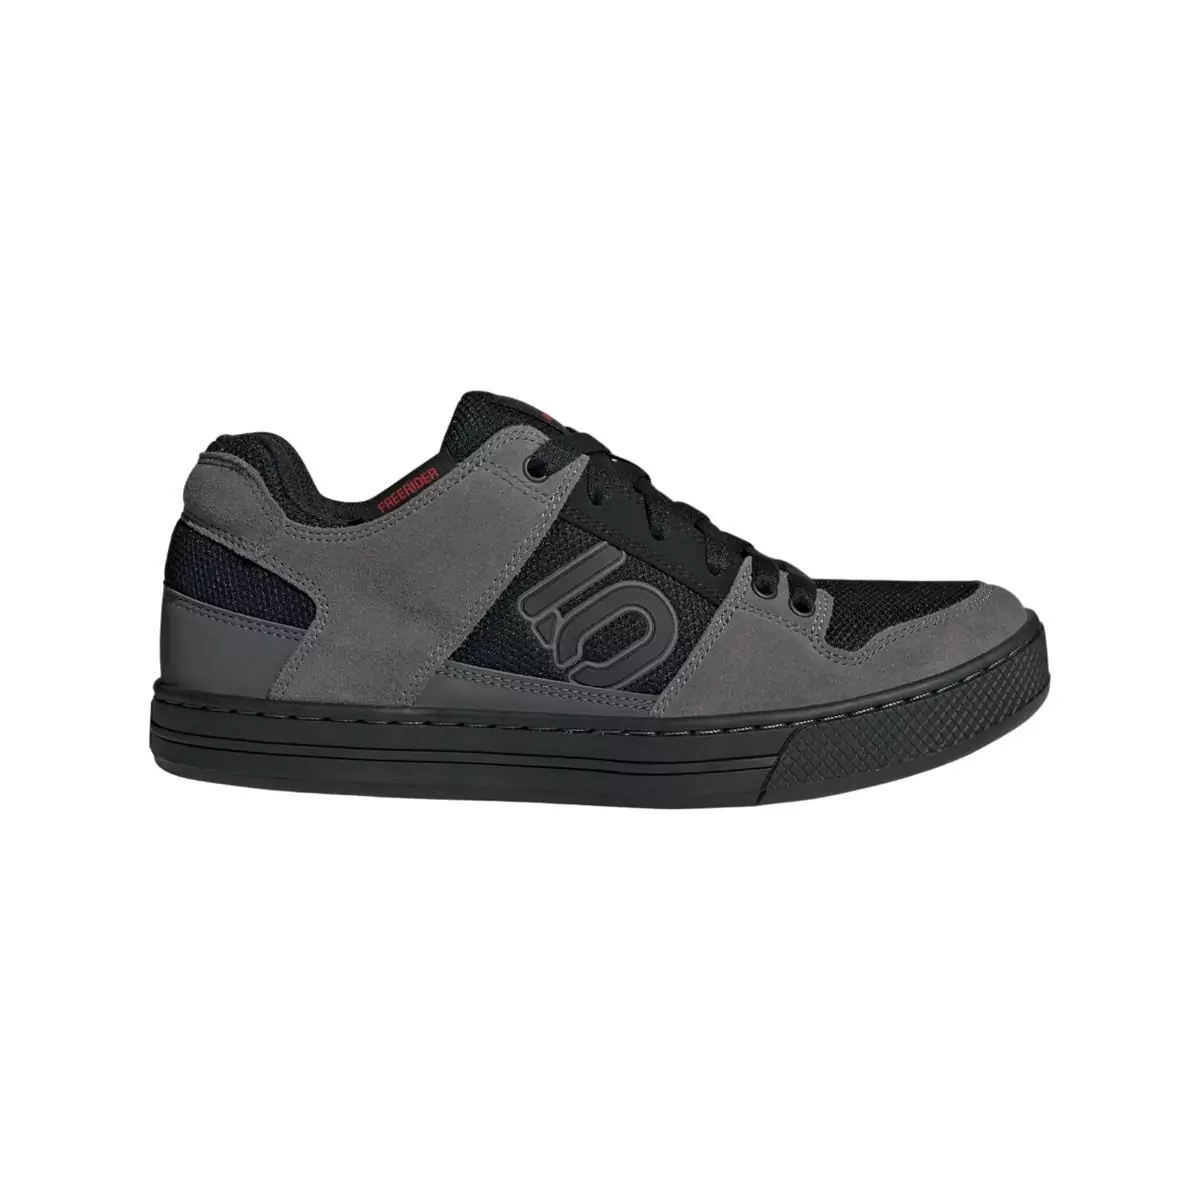 MTB Shoes Flat Freerider Gray Size 40 - image